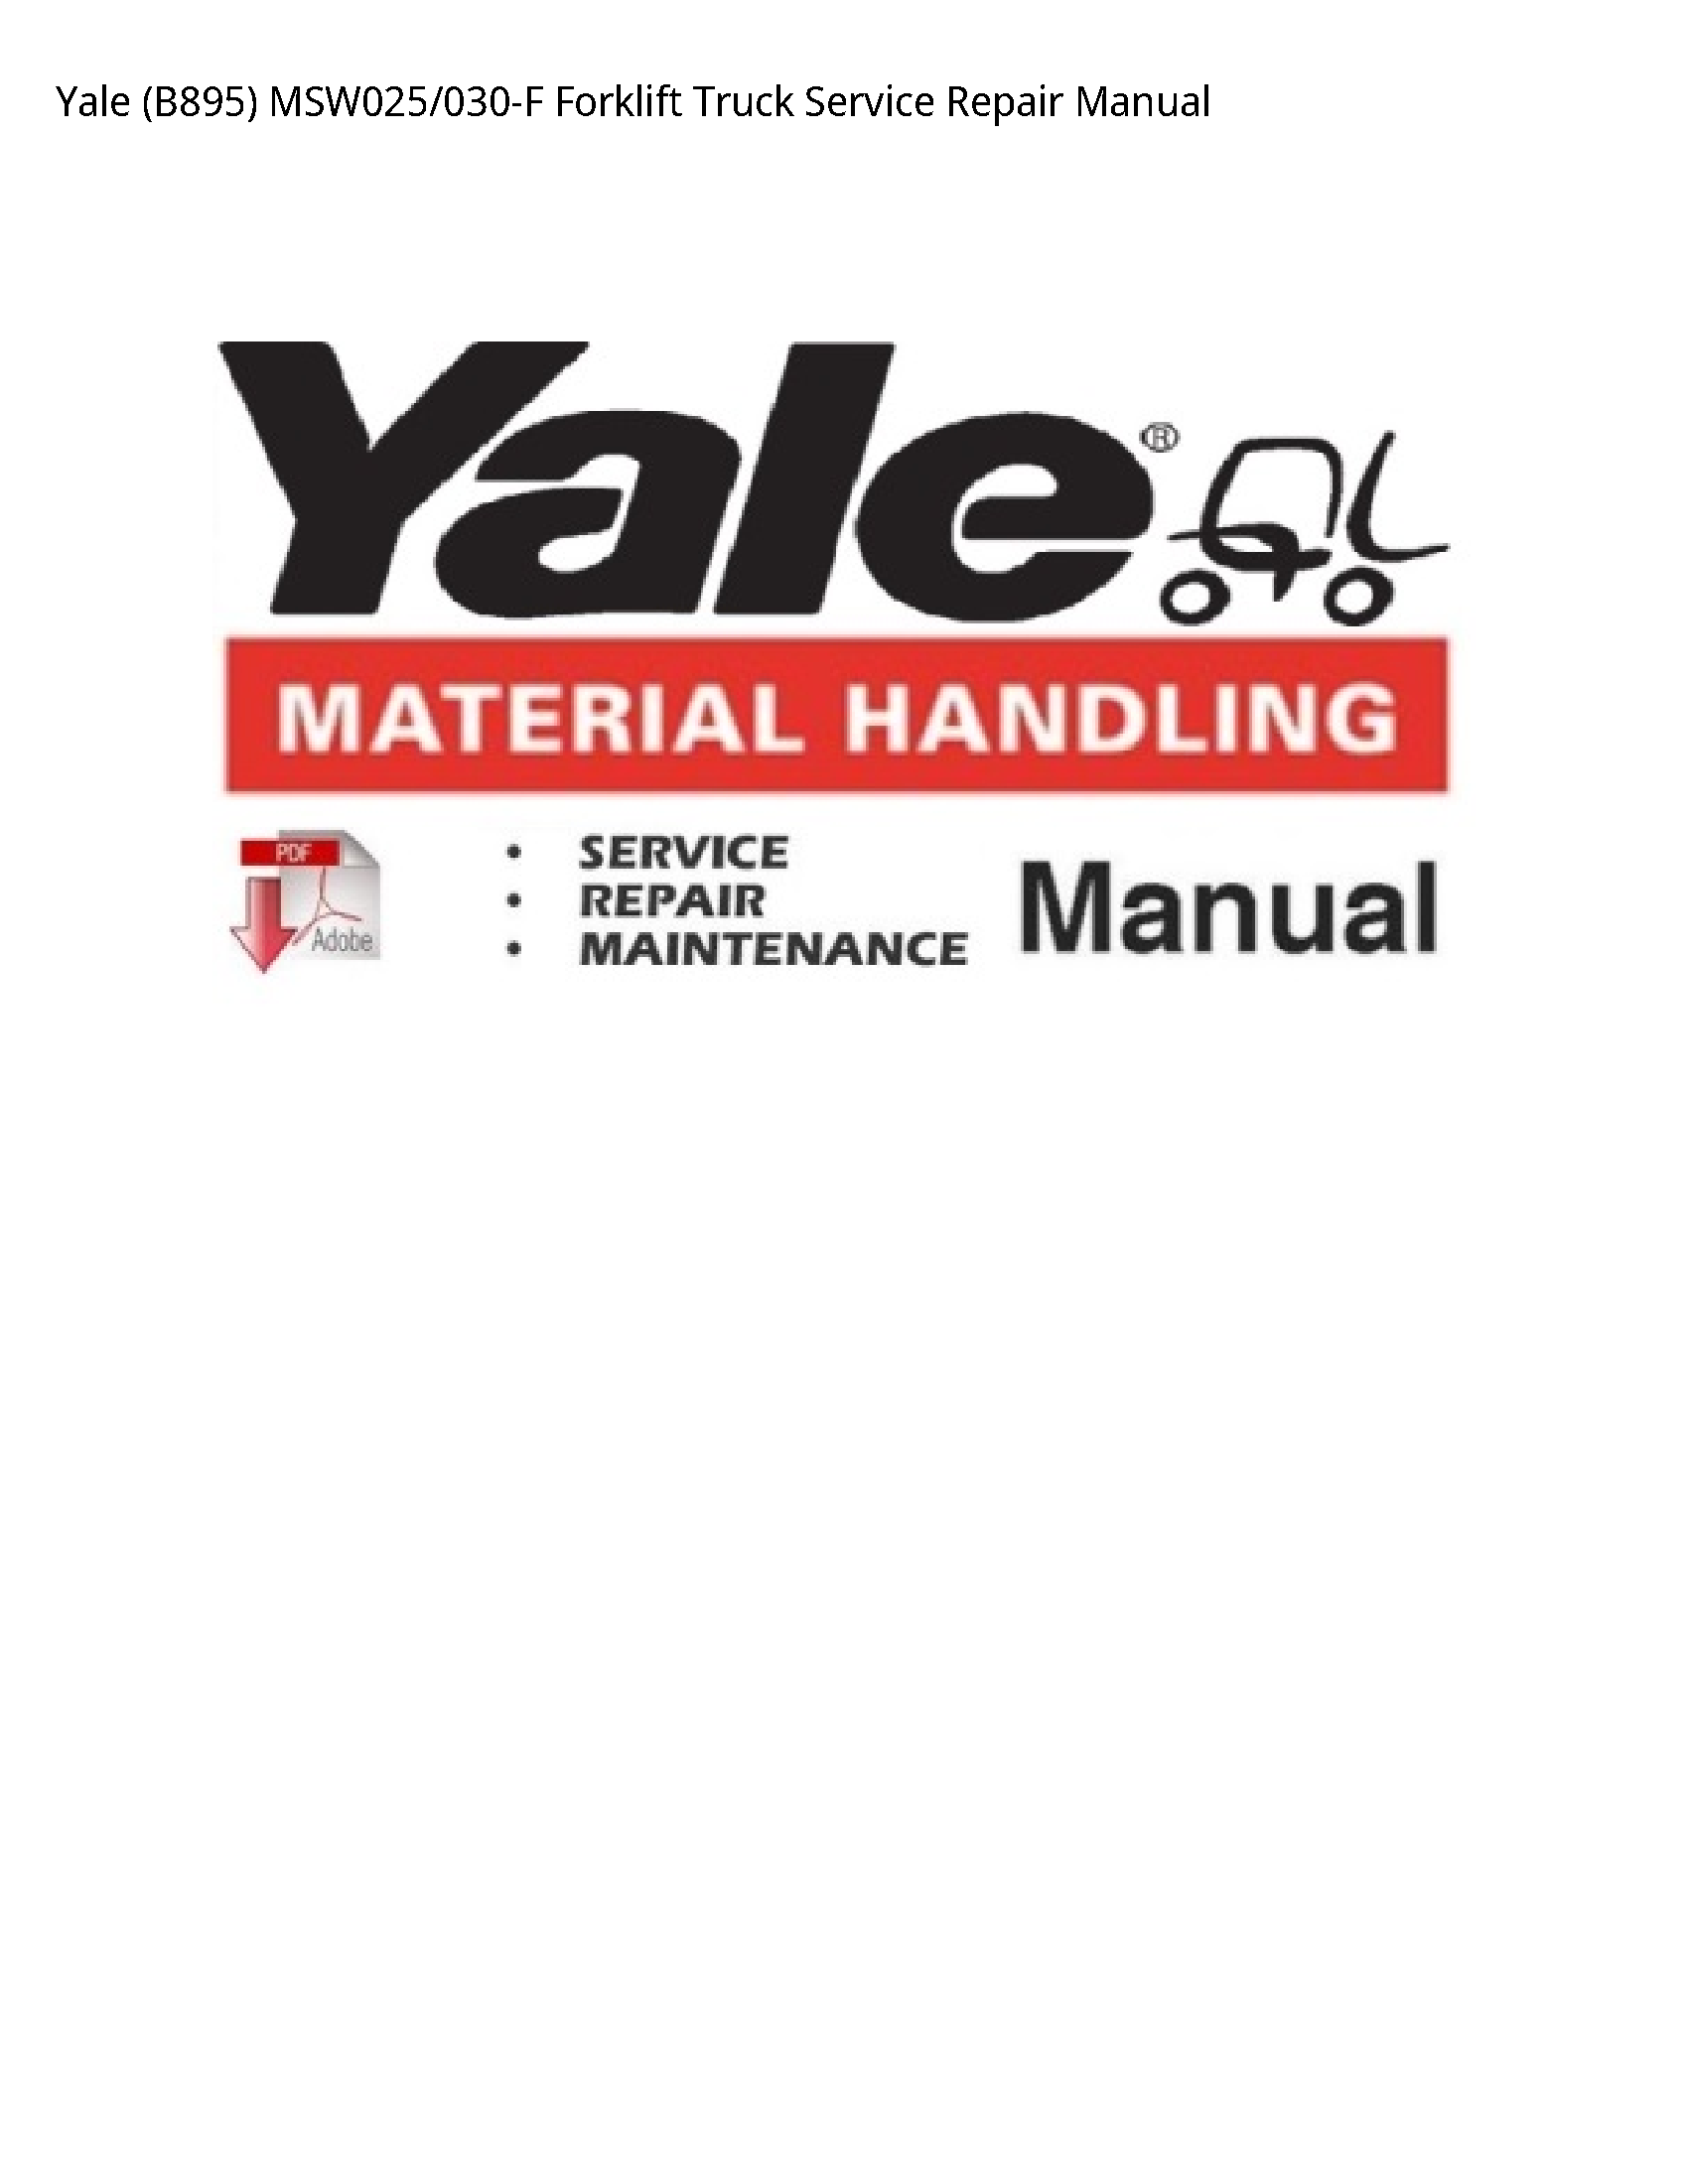 Yale (B895) Forklift Truck manual